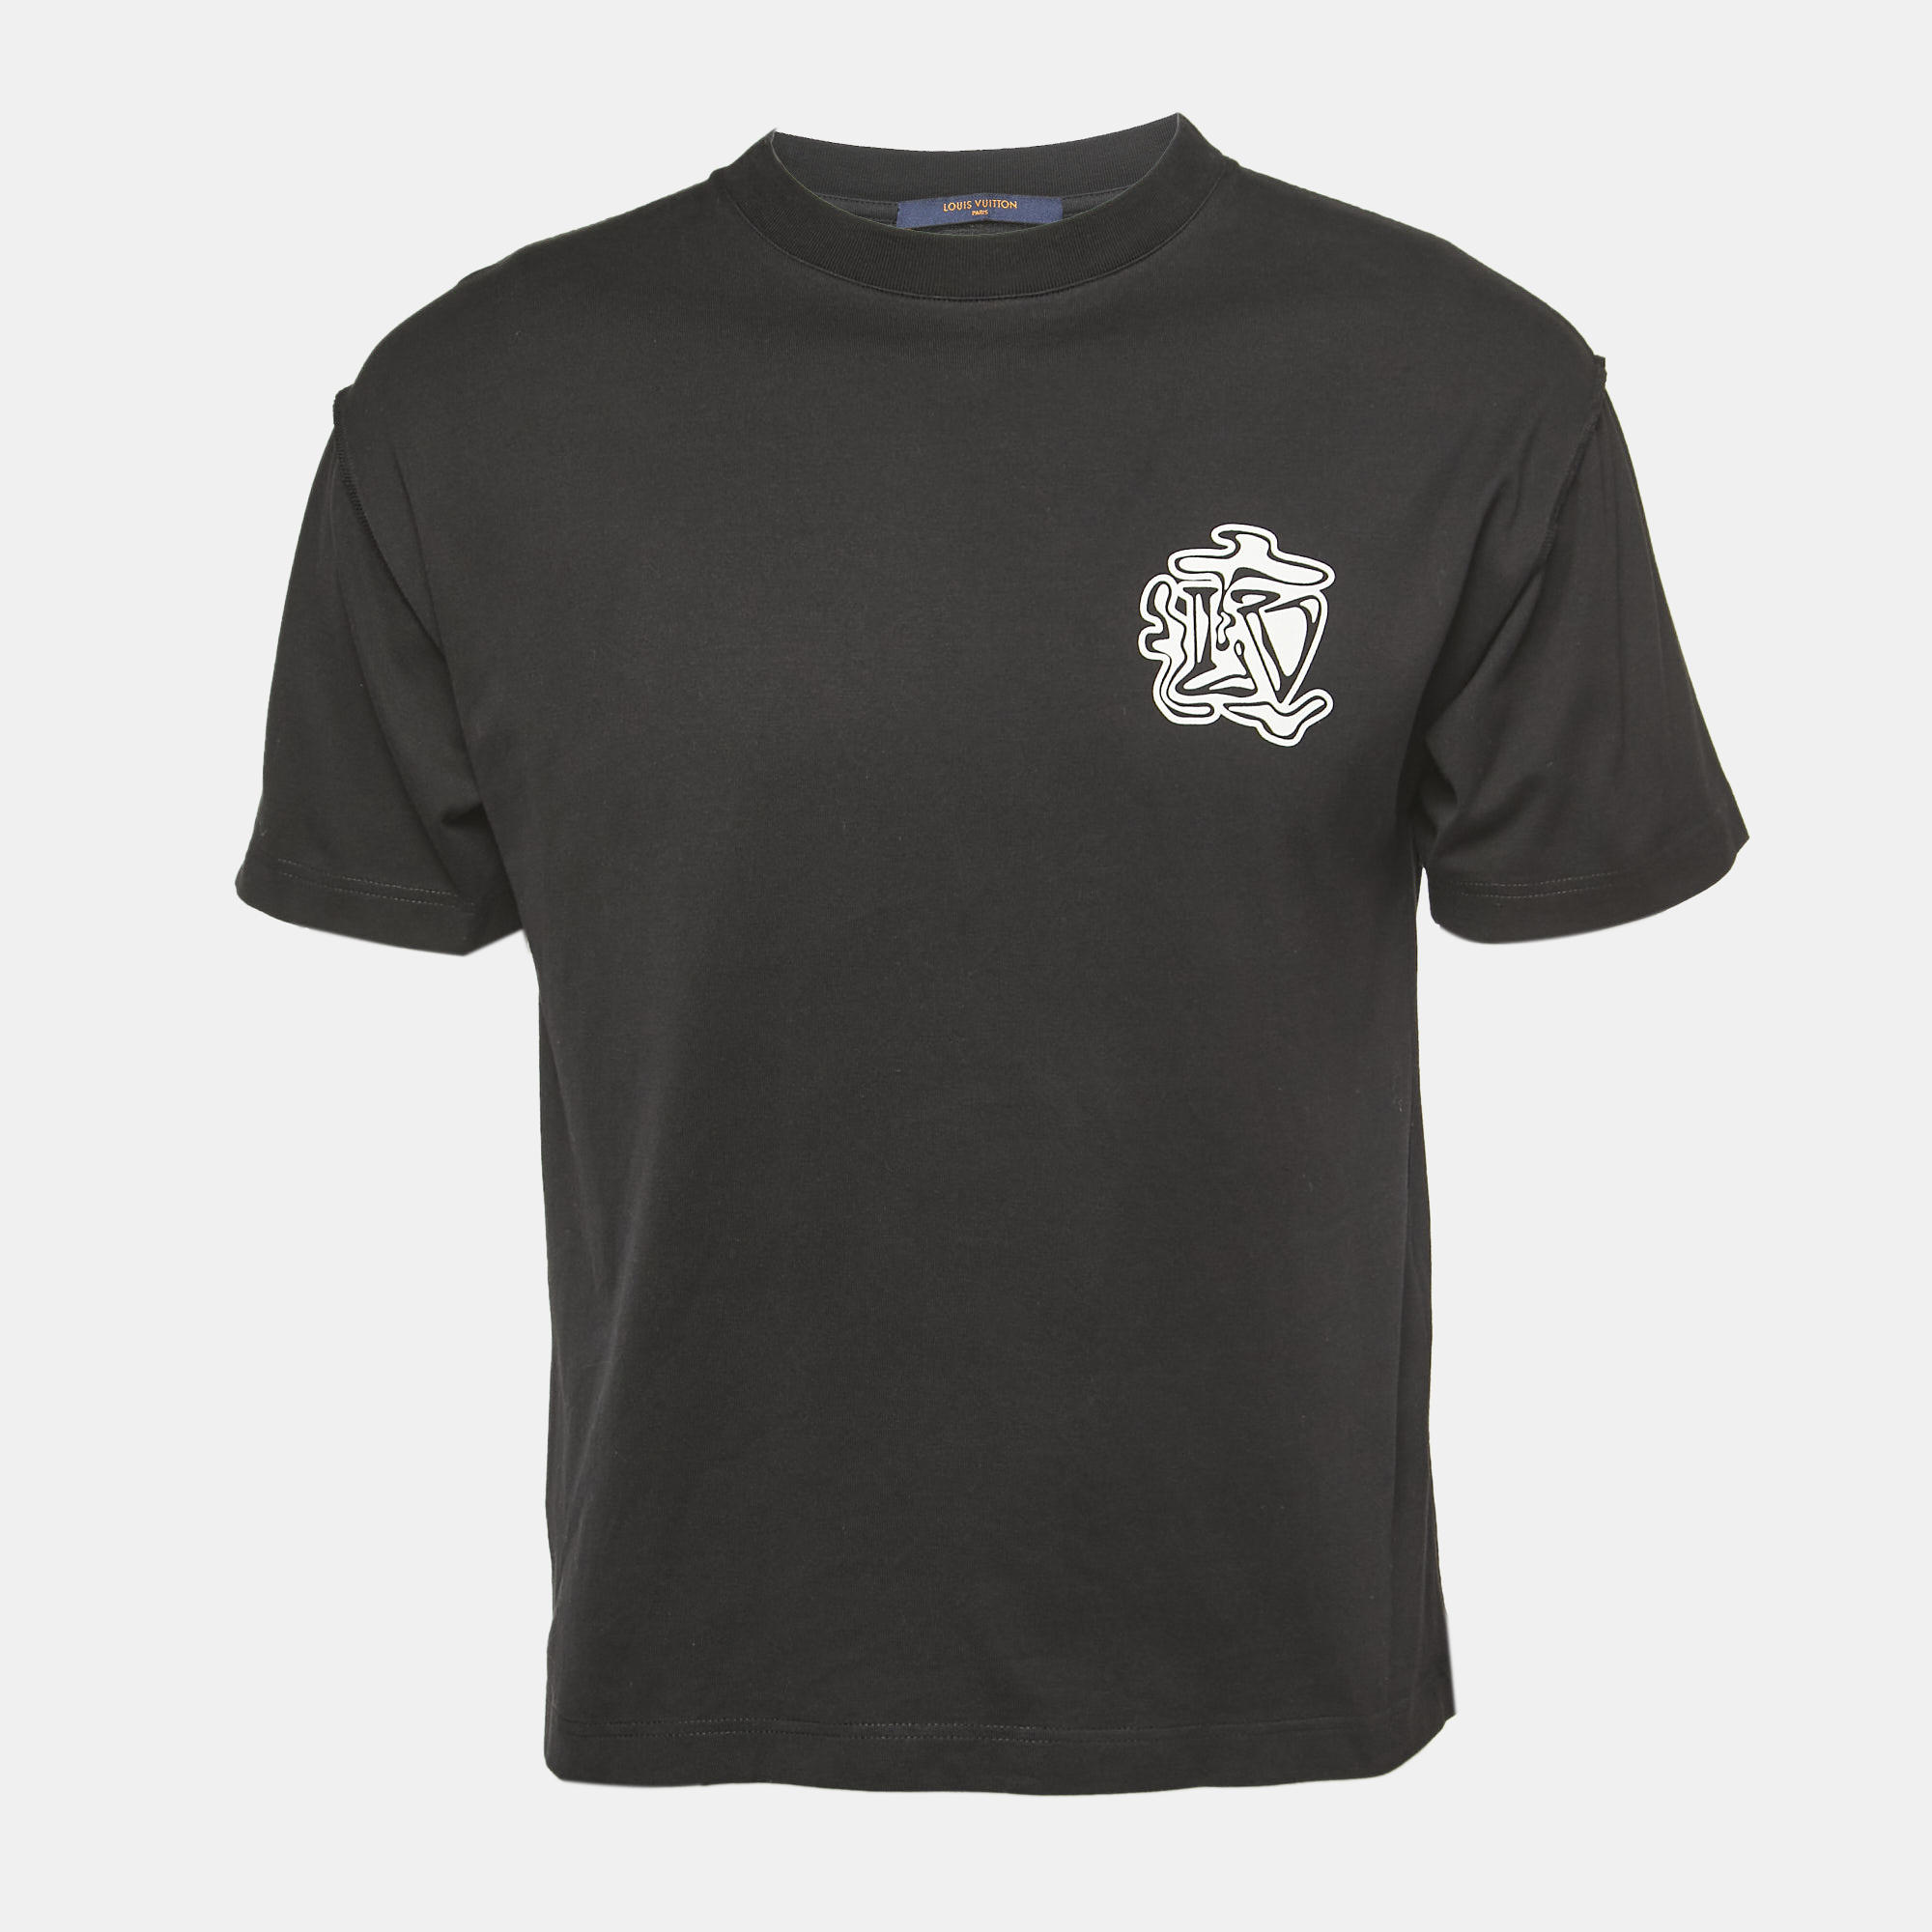 Louis Vuitton Black Logo Print Cotton Crew Neck Half Sleeve T-Shirt XS